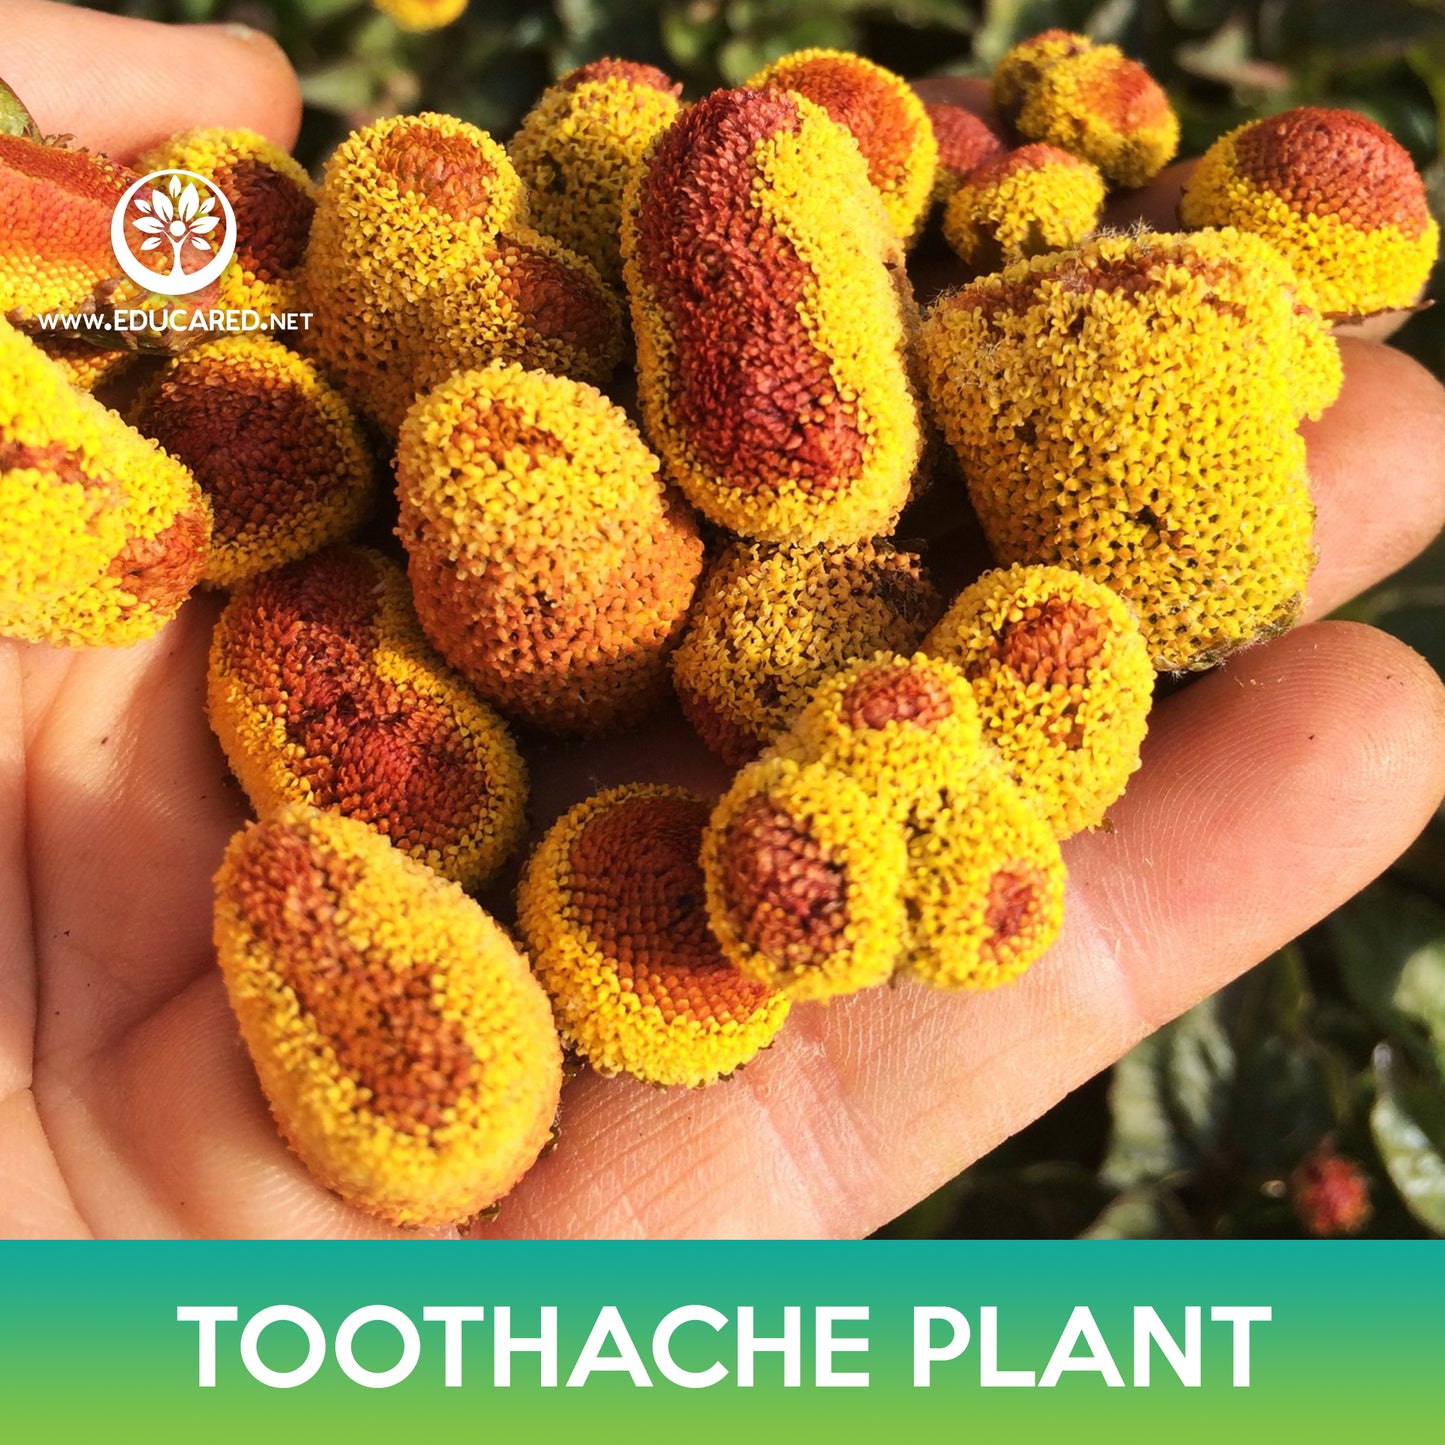 Toothache Plant Seeds, Eyeball Plant, Acmella oleracea